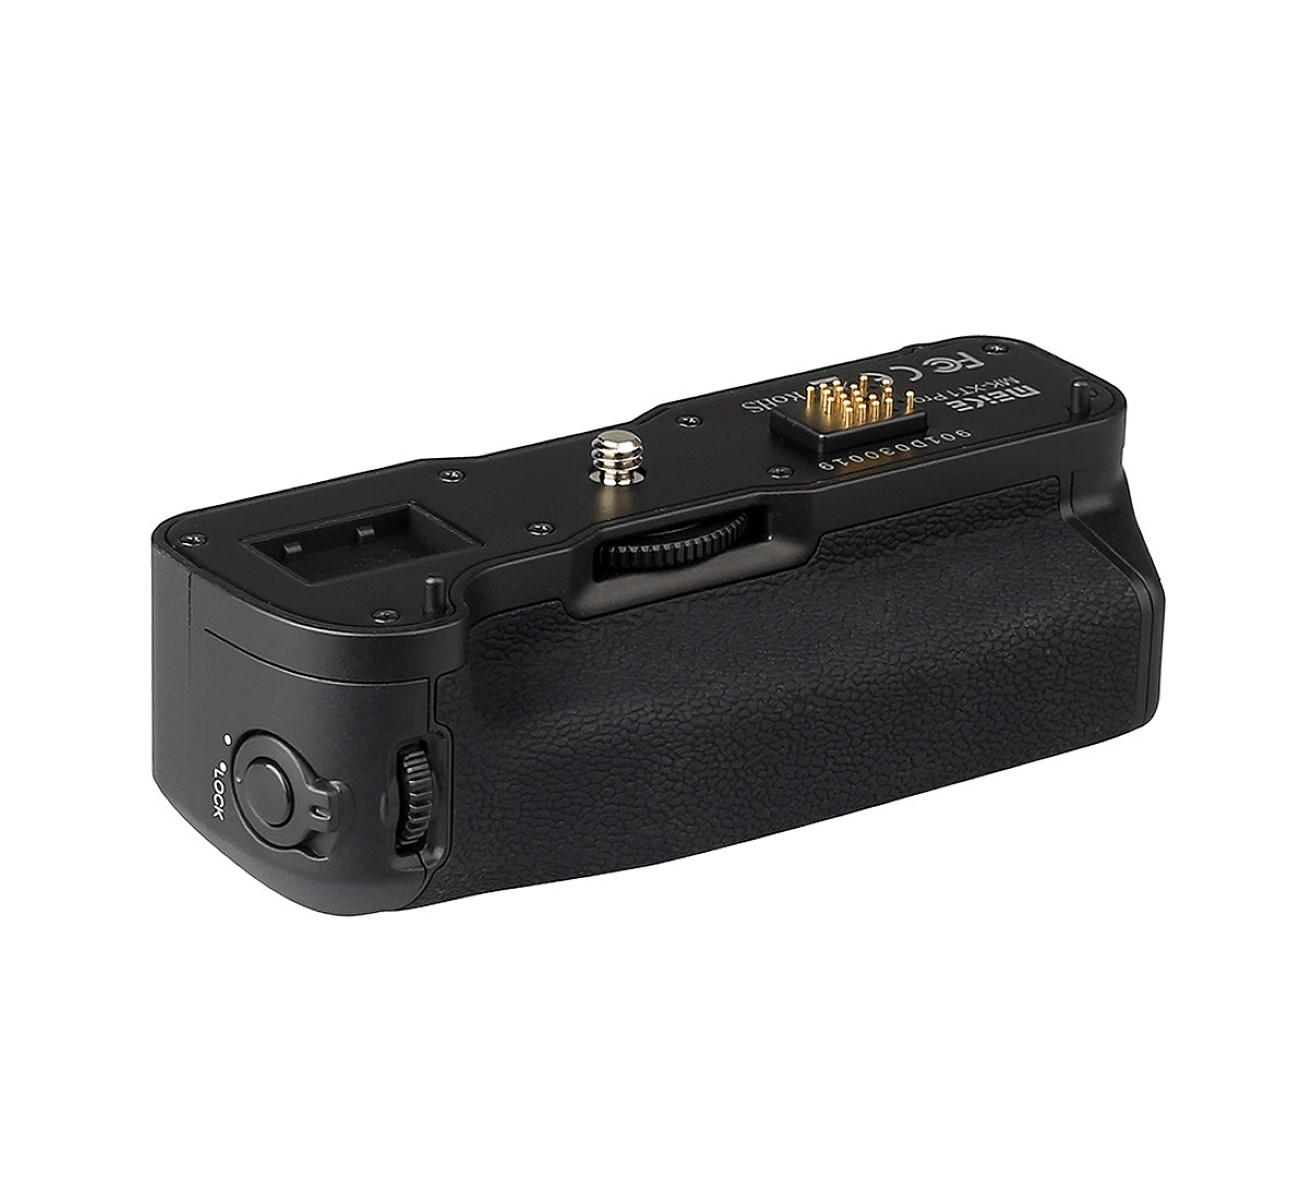 MEIKE Batteriegriff Fujifilm X-T1 Funk-Timer-Fernauslöser, mit mit Funk-Timer-Fernauslöser ähnlich Batteriegriff VG-XT1, Black